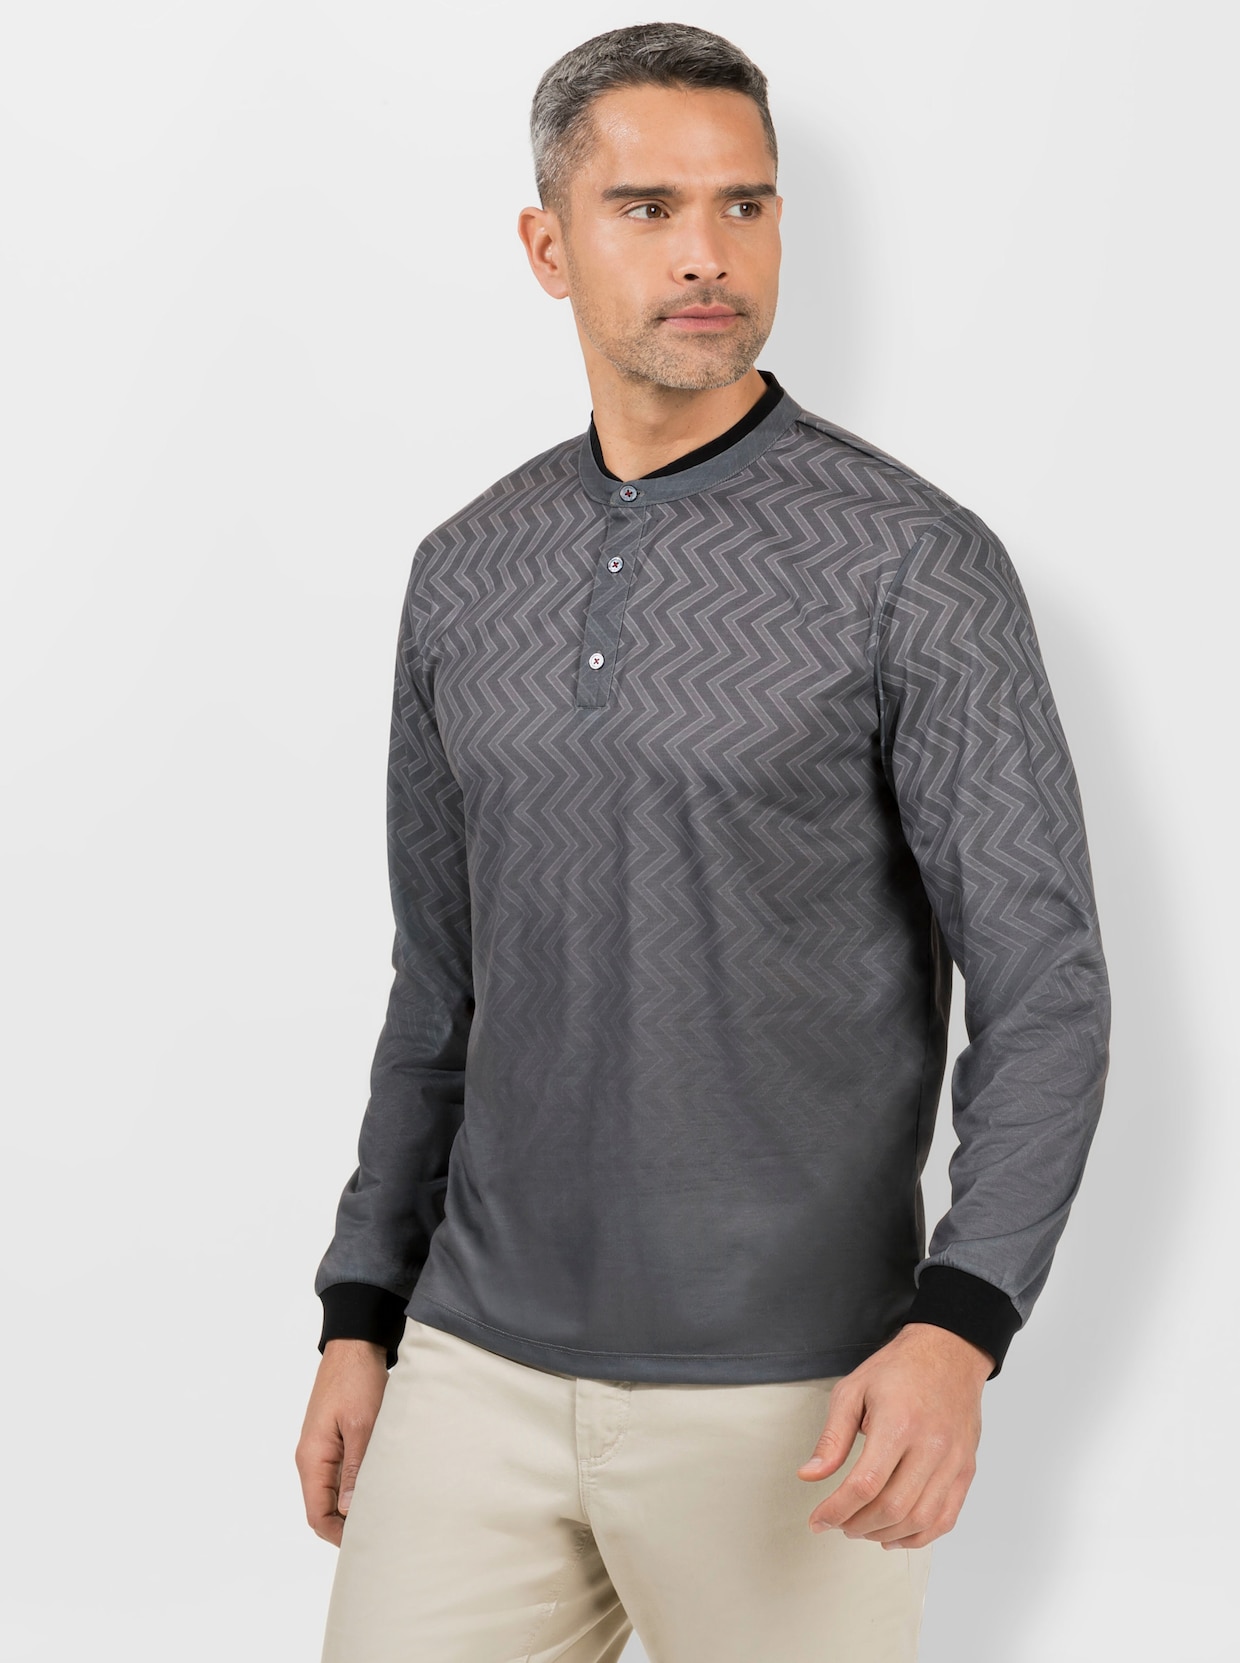 Marco Donati Langarm-Shirt - grau-gemustert